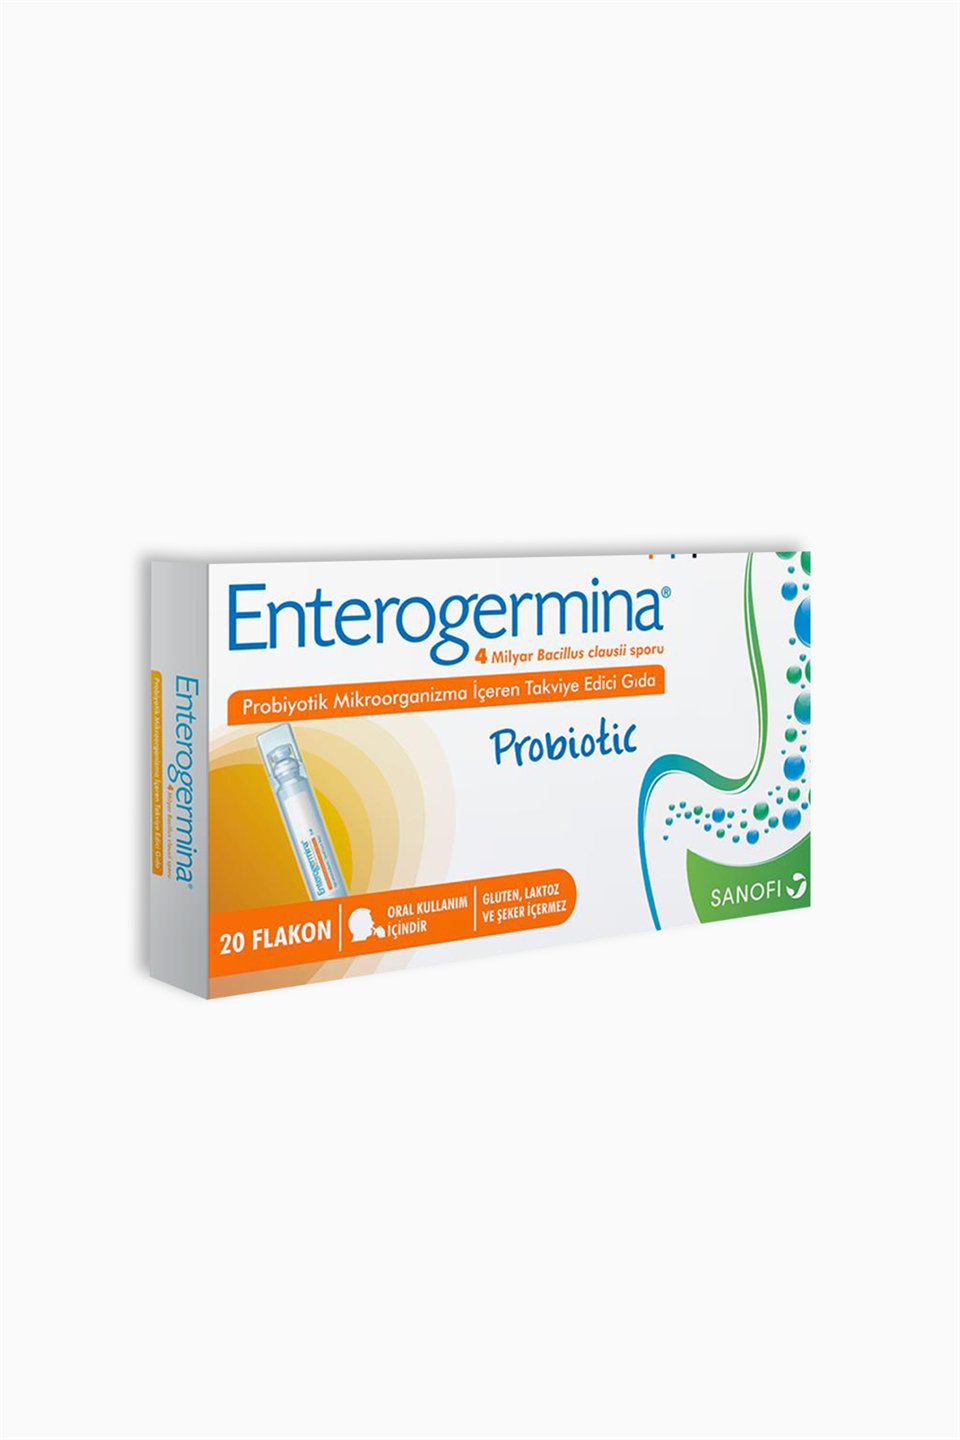 Enterogermina Yetişkin 5 ml x 20 Flakon